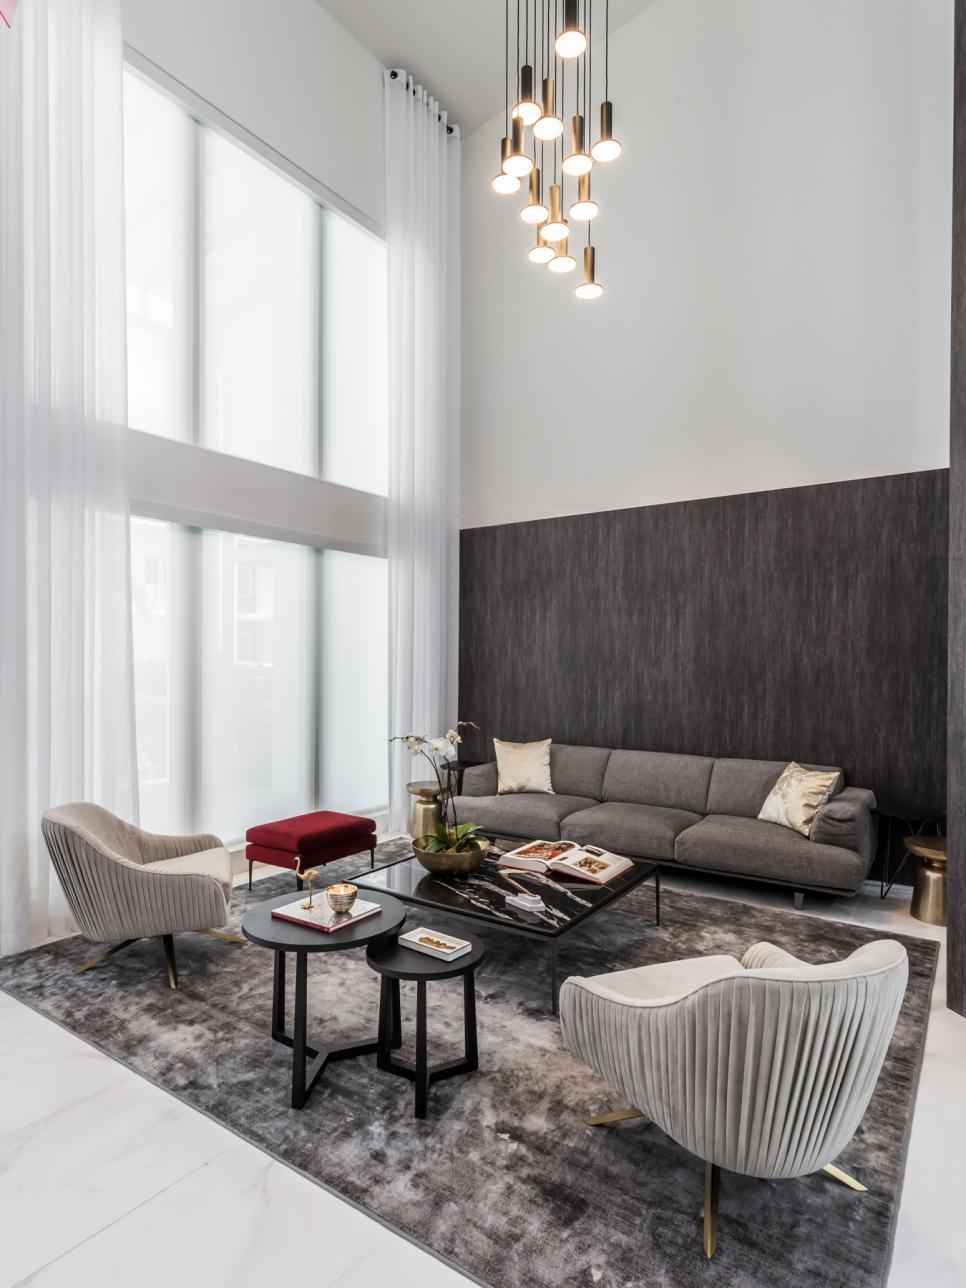 Modern Light Fixture Creates Connectedness in Formal Living Room | HGTV